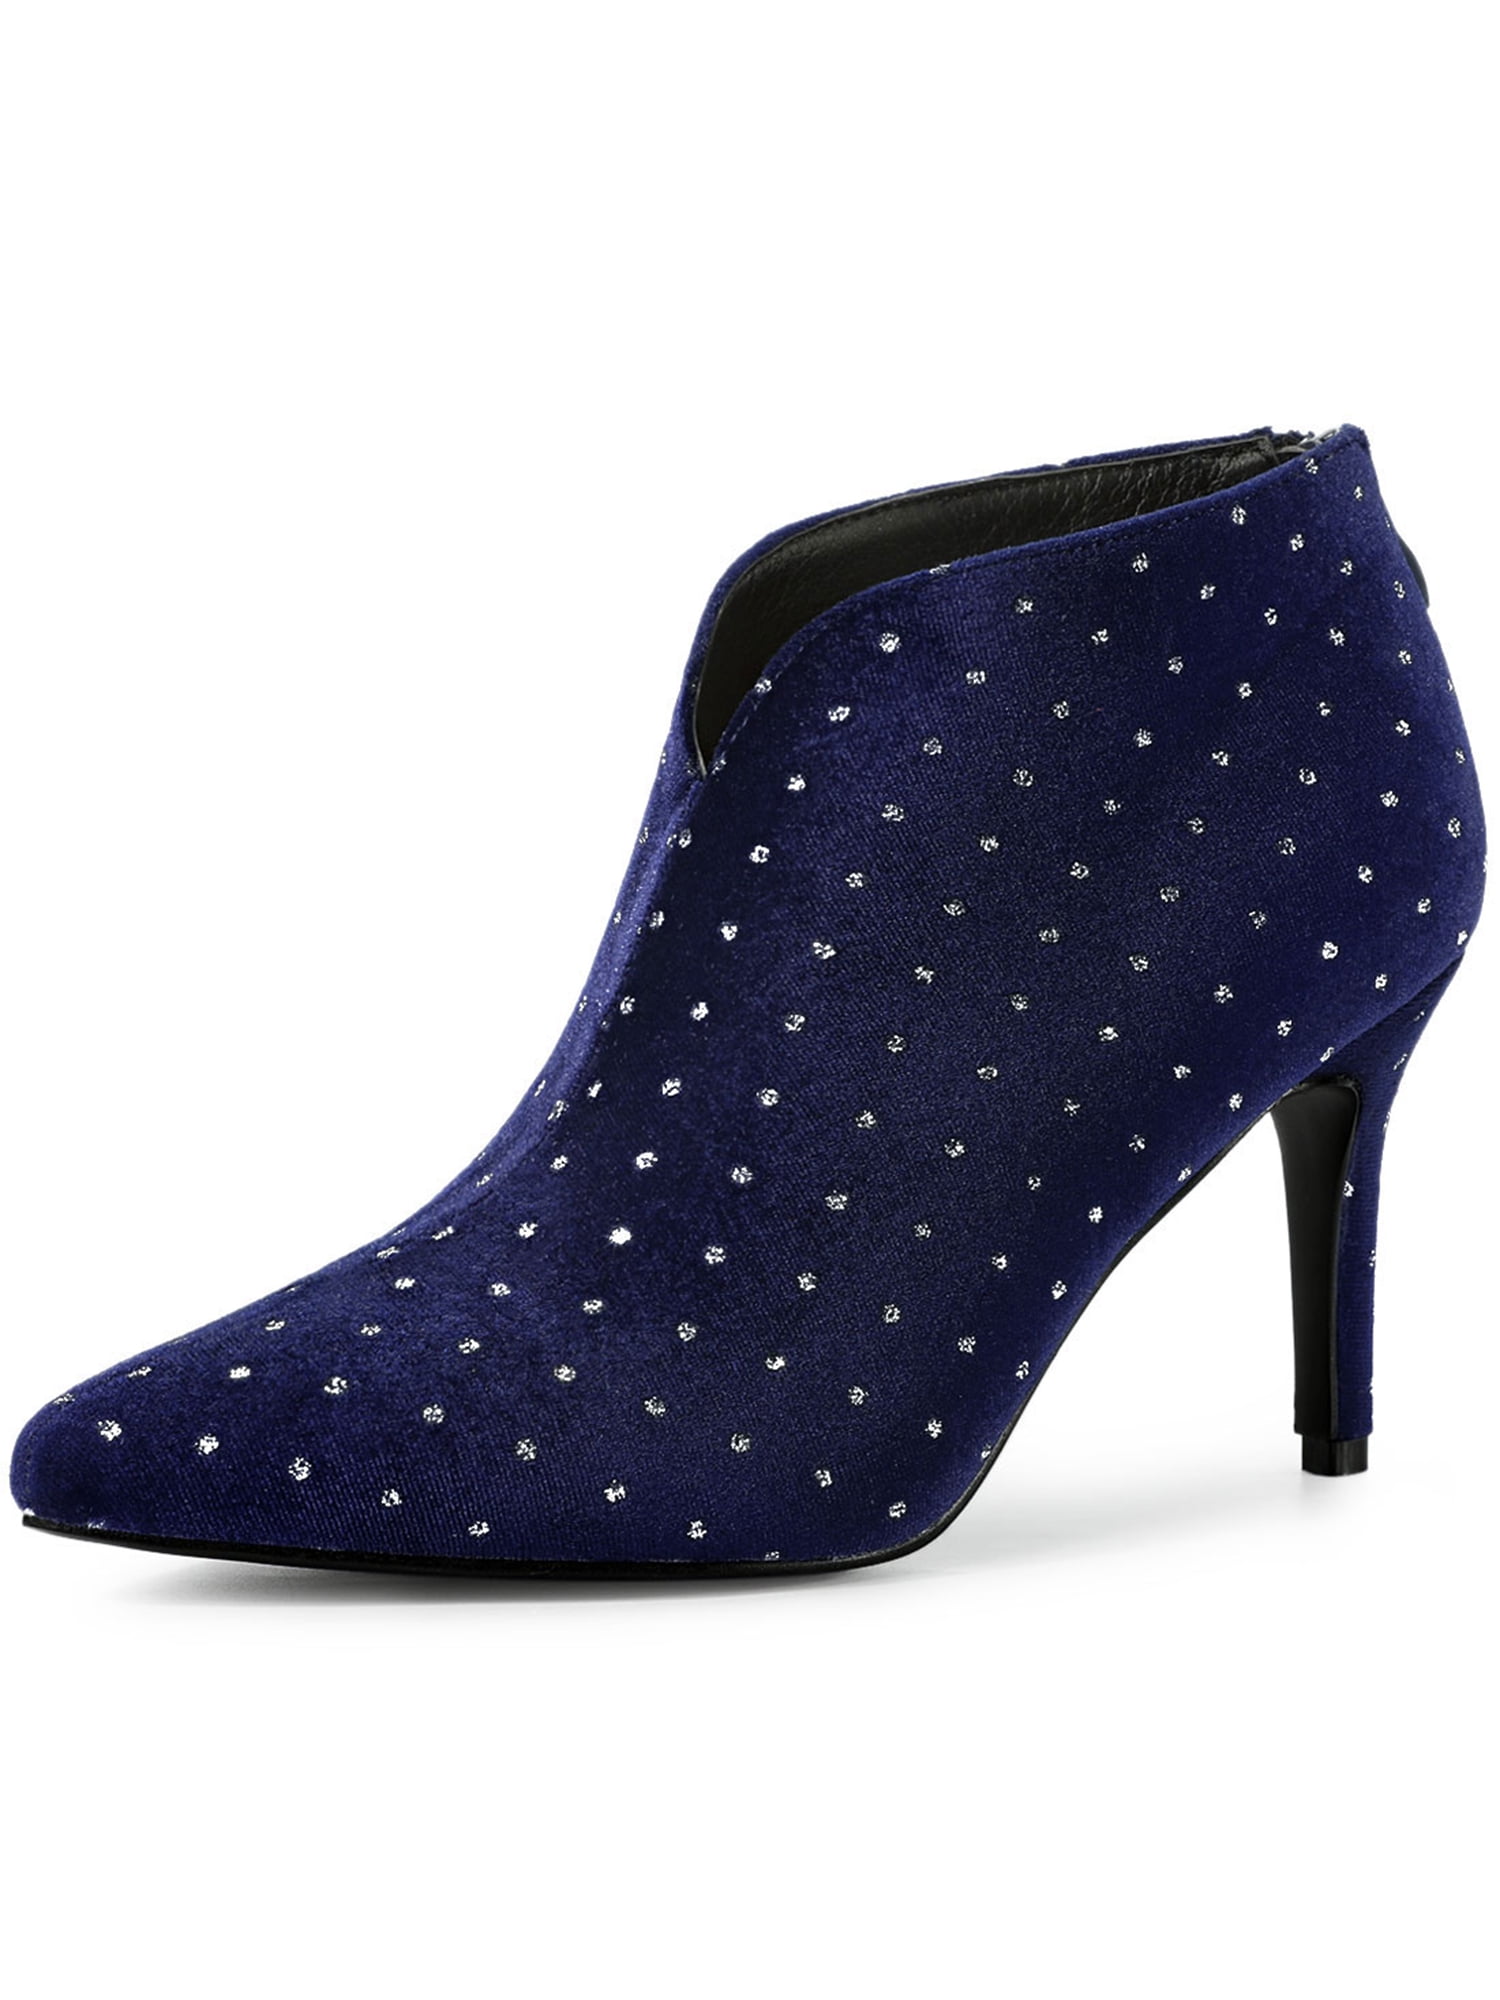 Xoxo Womens Taniah Pointed Toe Ankle Fashion Boots Black/White Snake Size 7.5